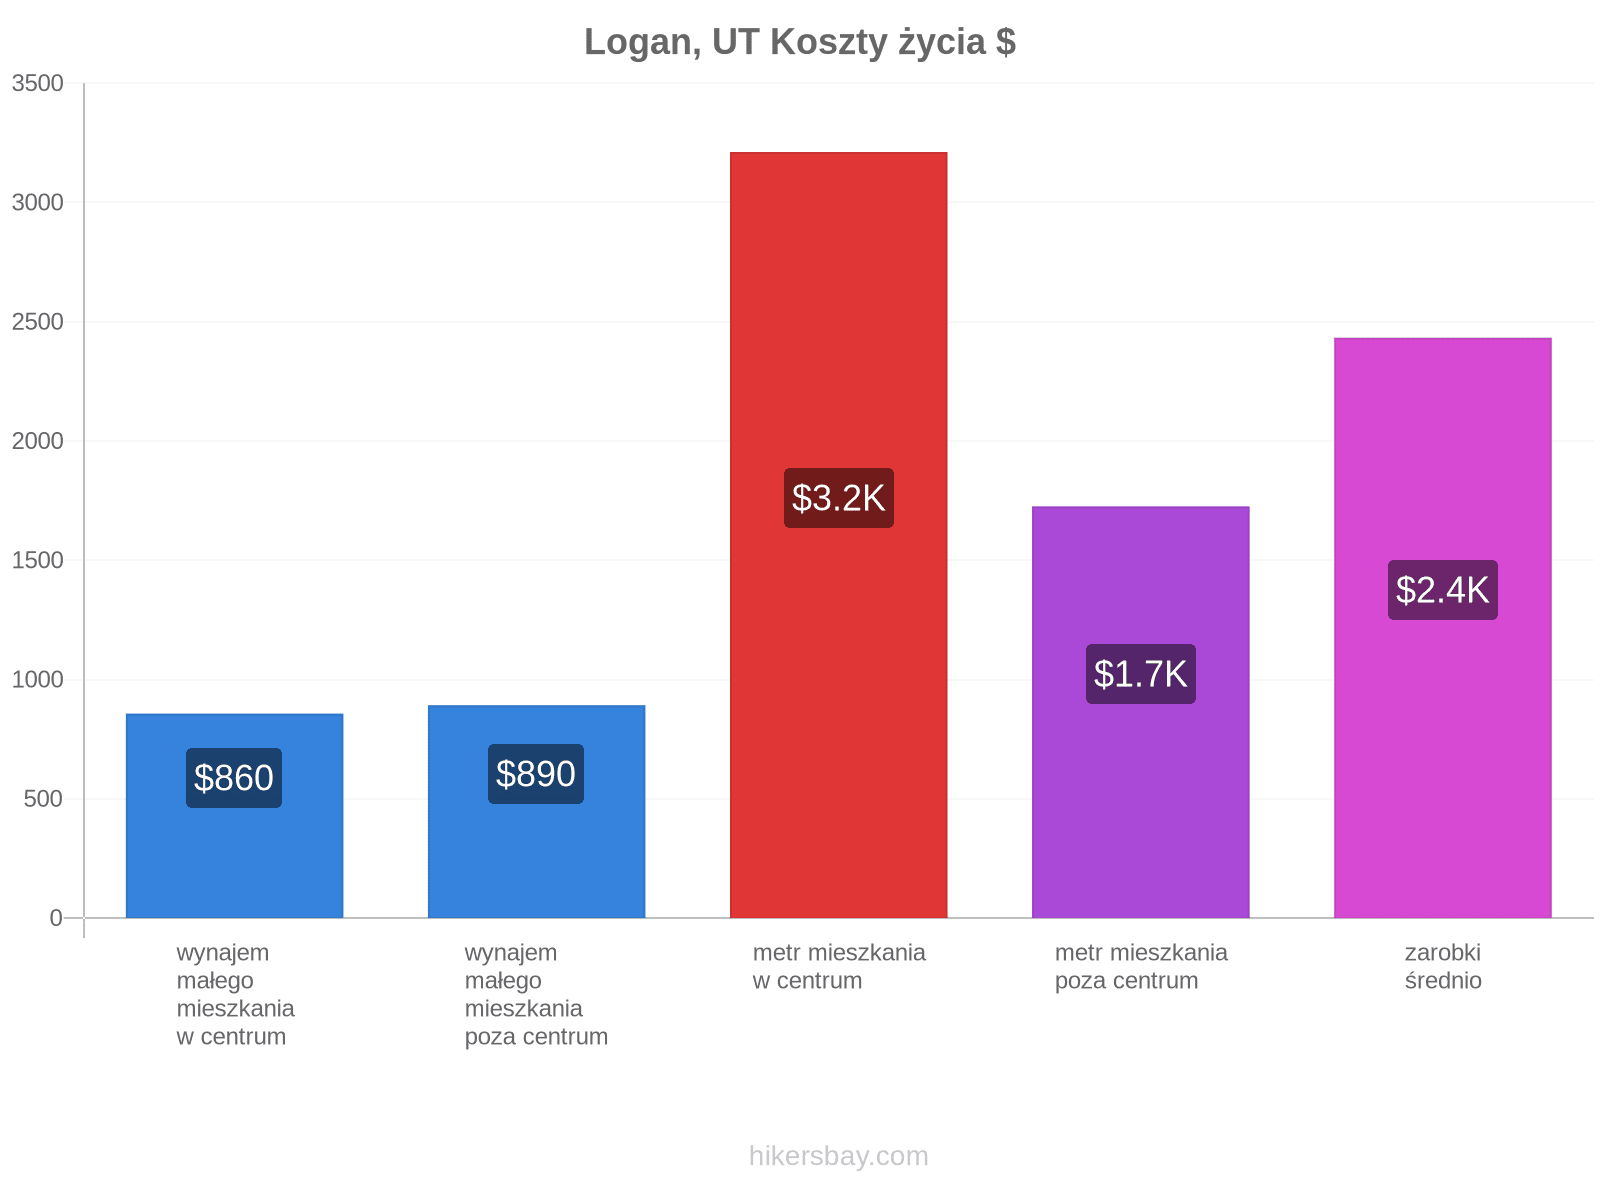 Logan, UT koszty życia hikersbay.com